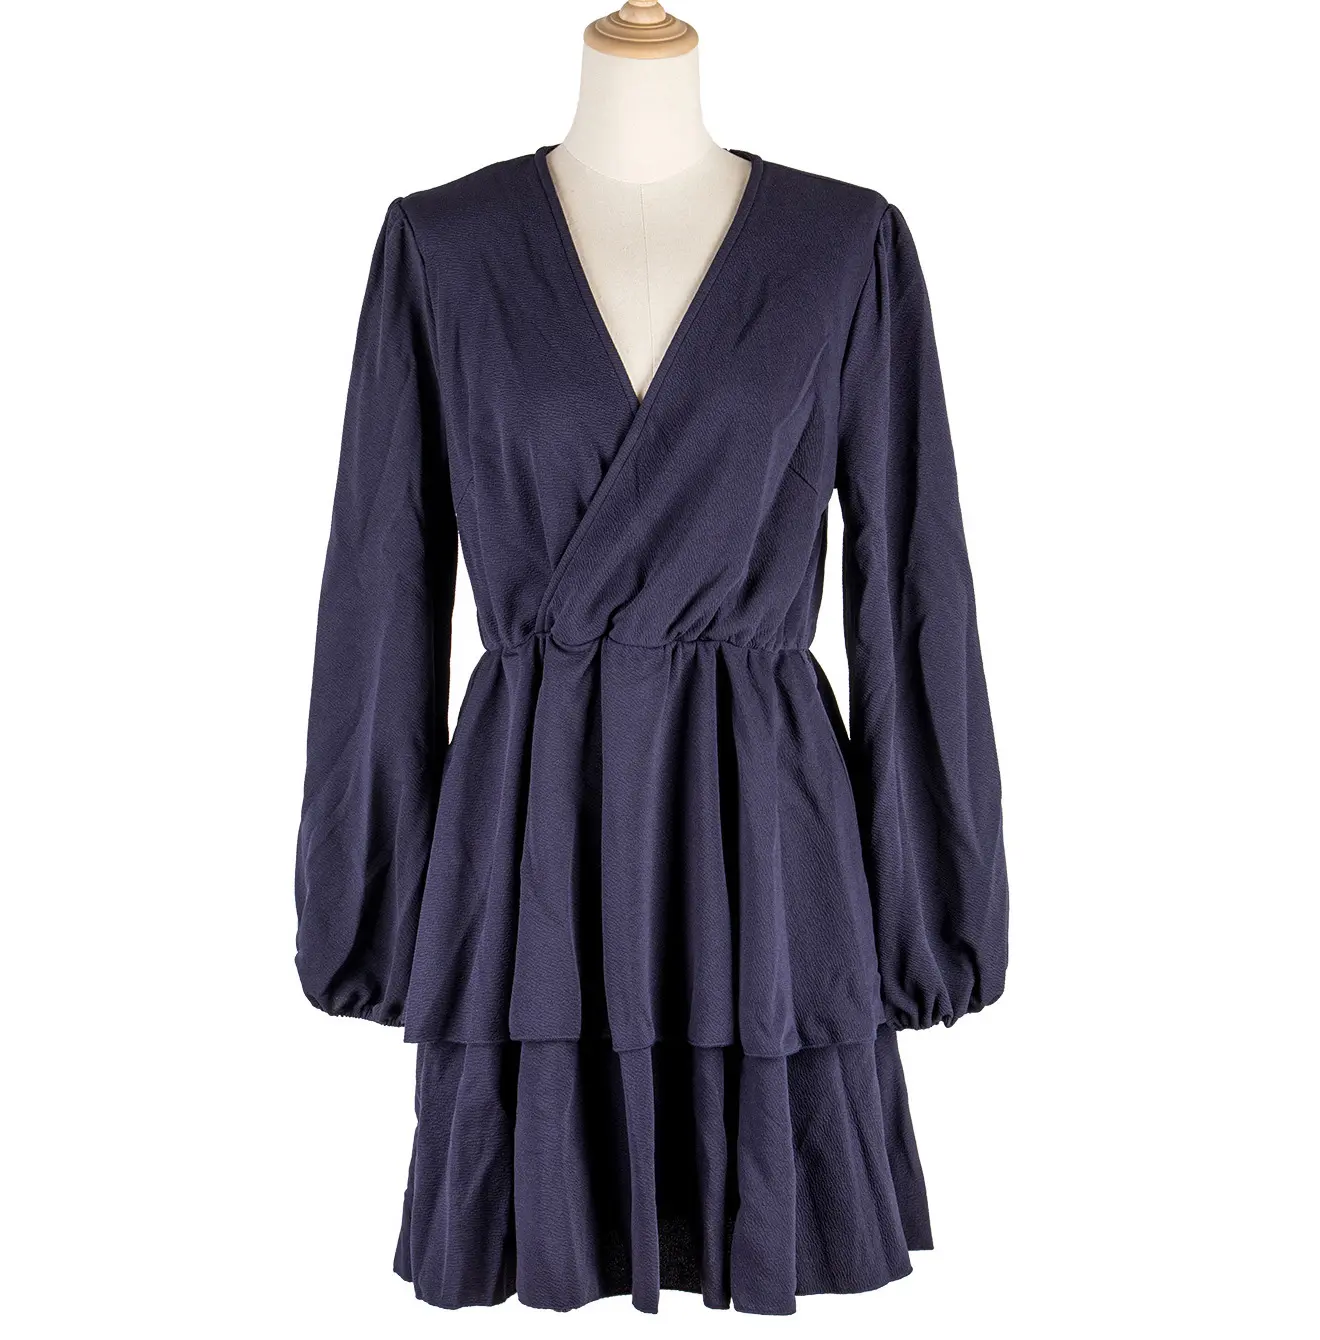 Dark Blue Best Selling Lace Long Sleeve Solid Women Dresses Formal Elegant Party Woman Dress